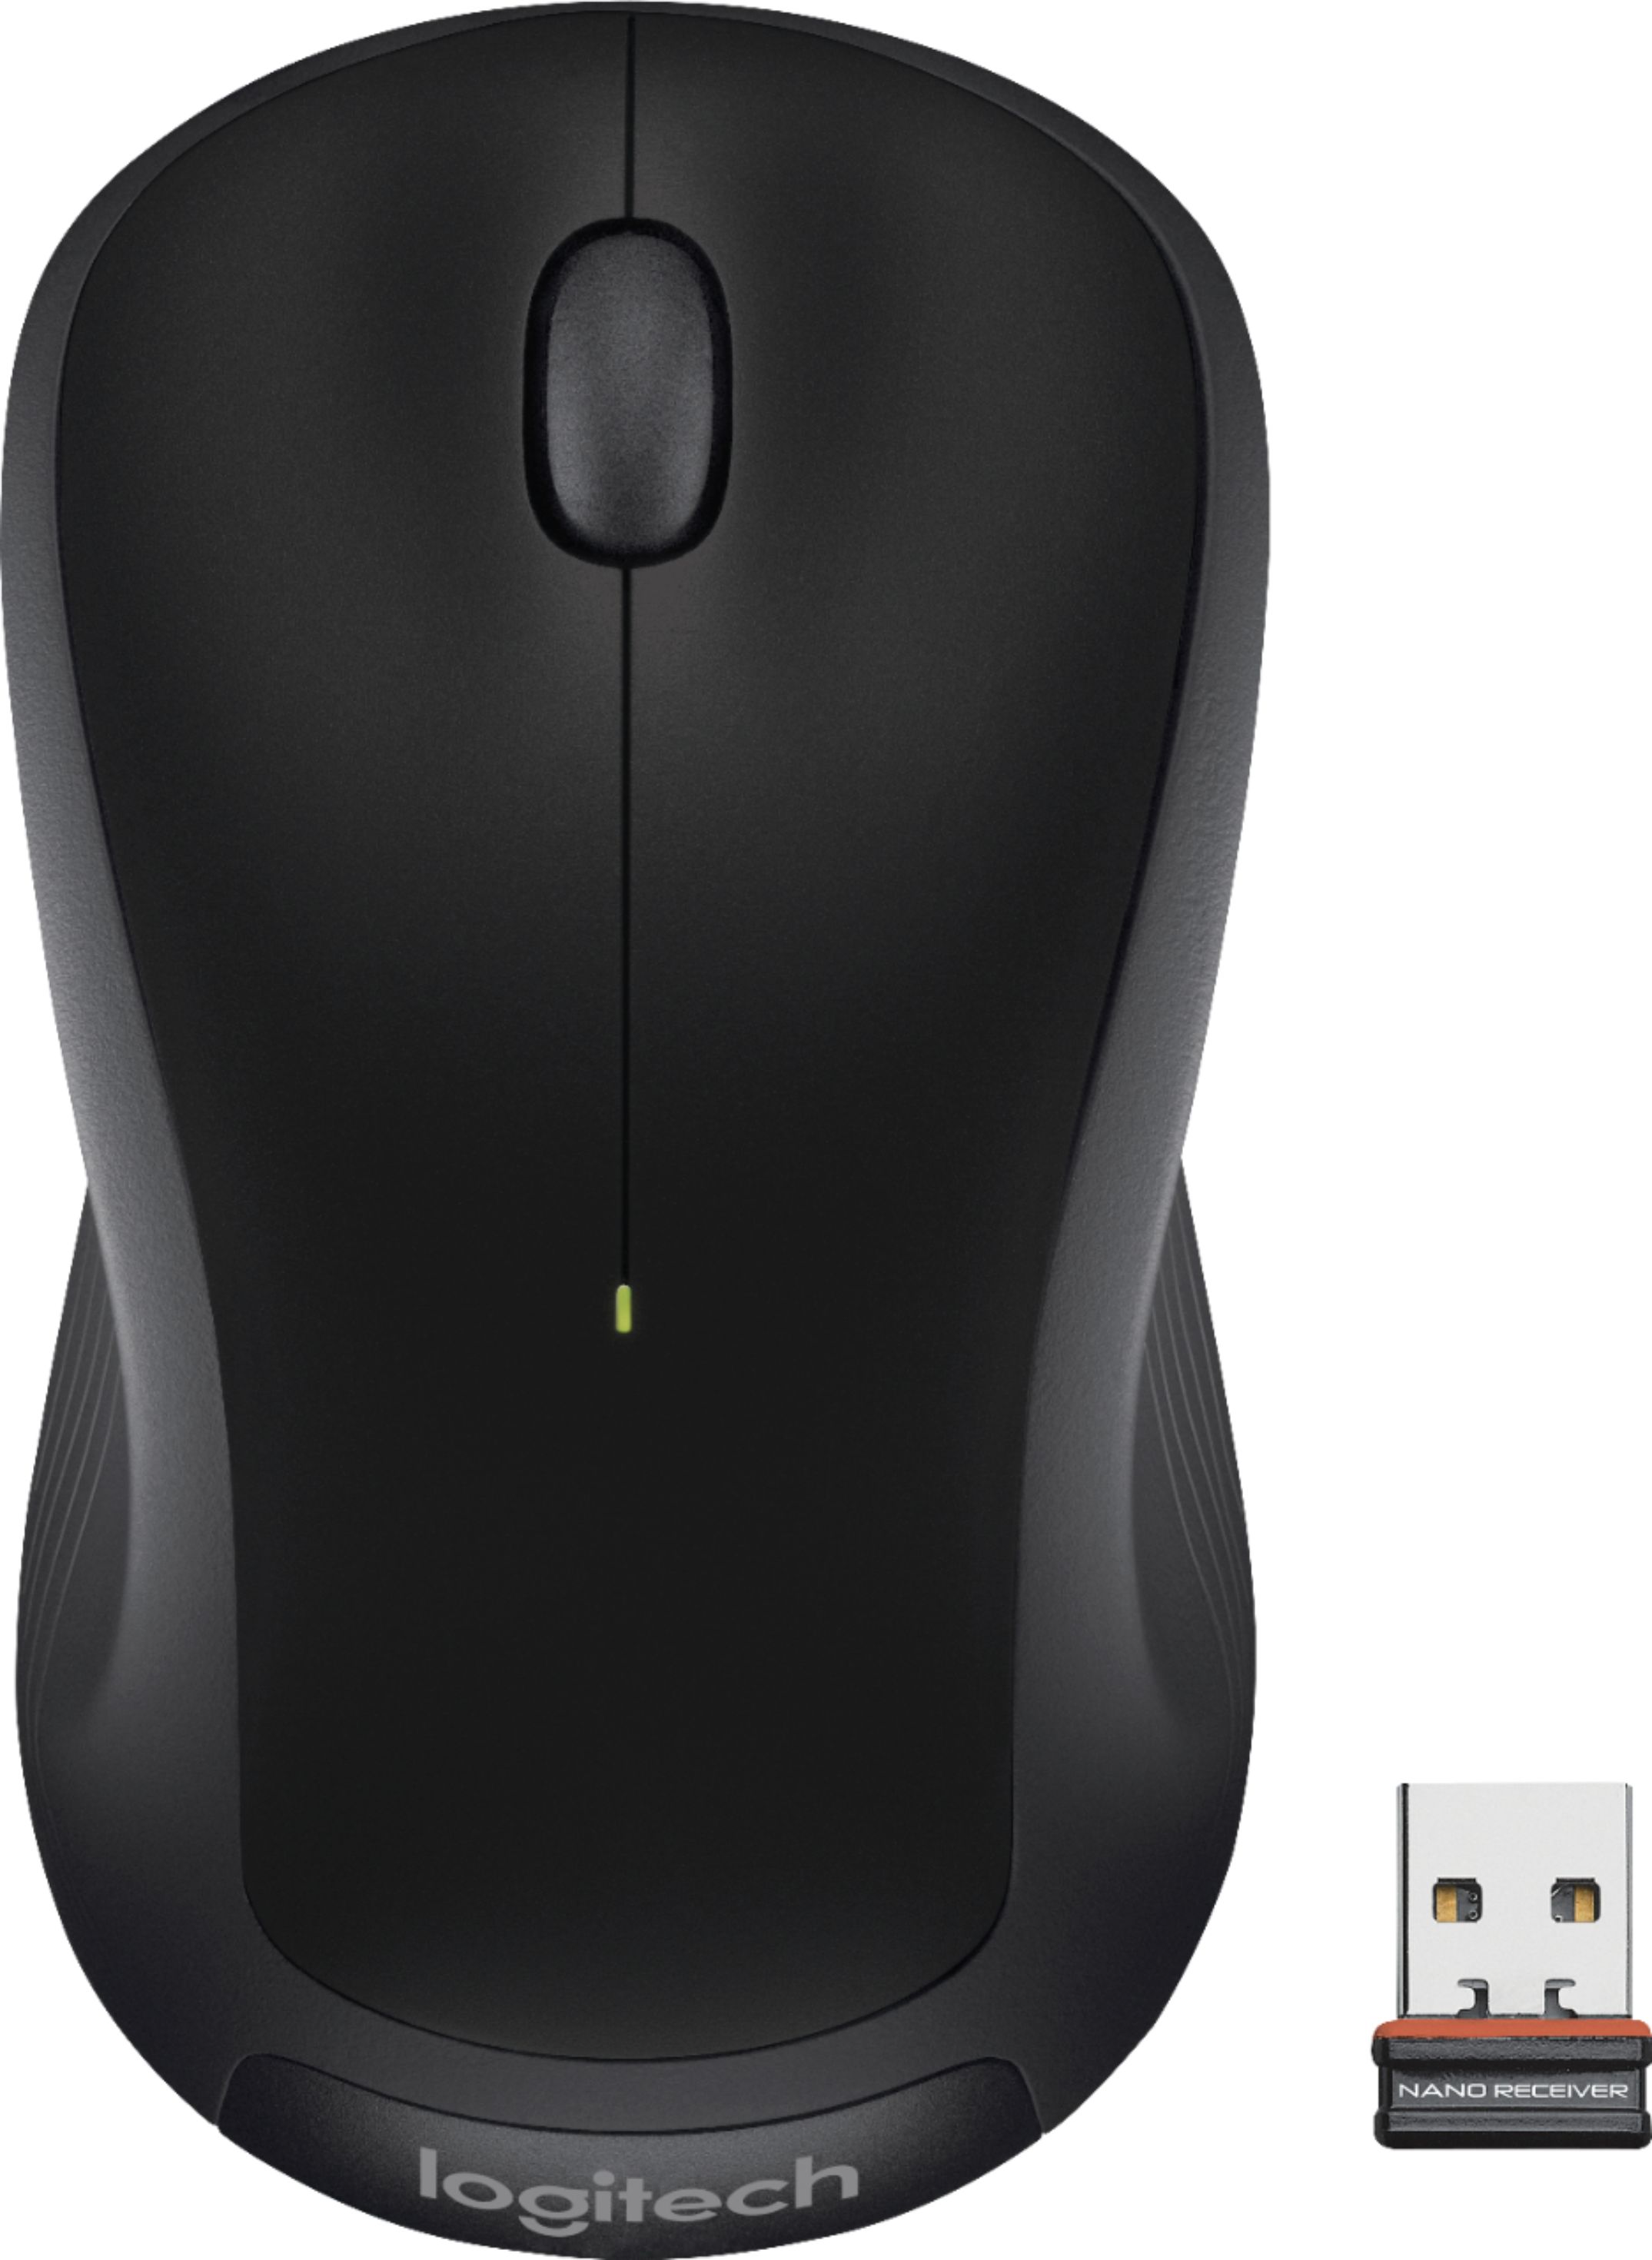 Logitech - M310 Wireless Optical Mouse - Black